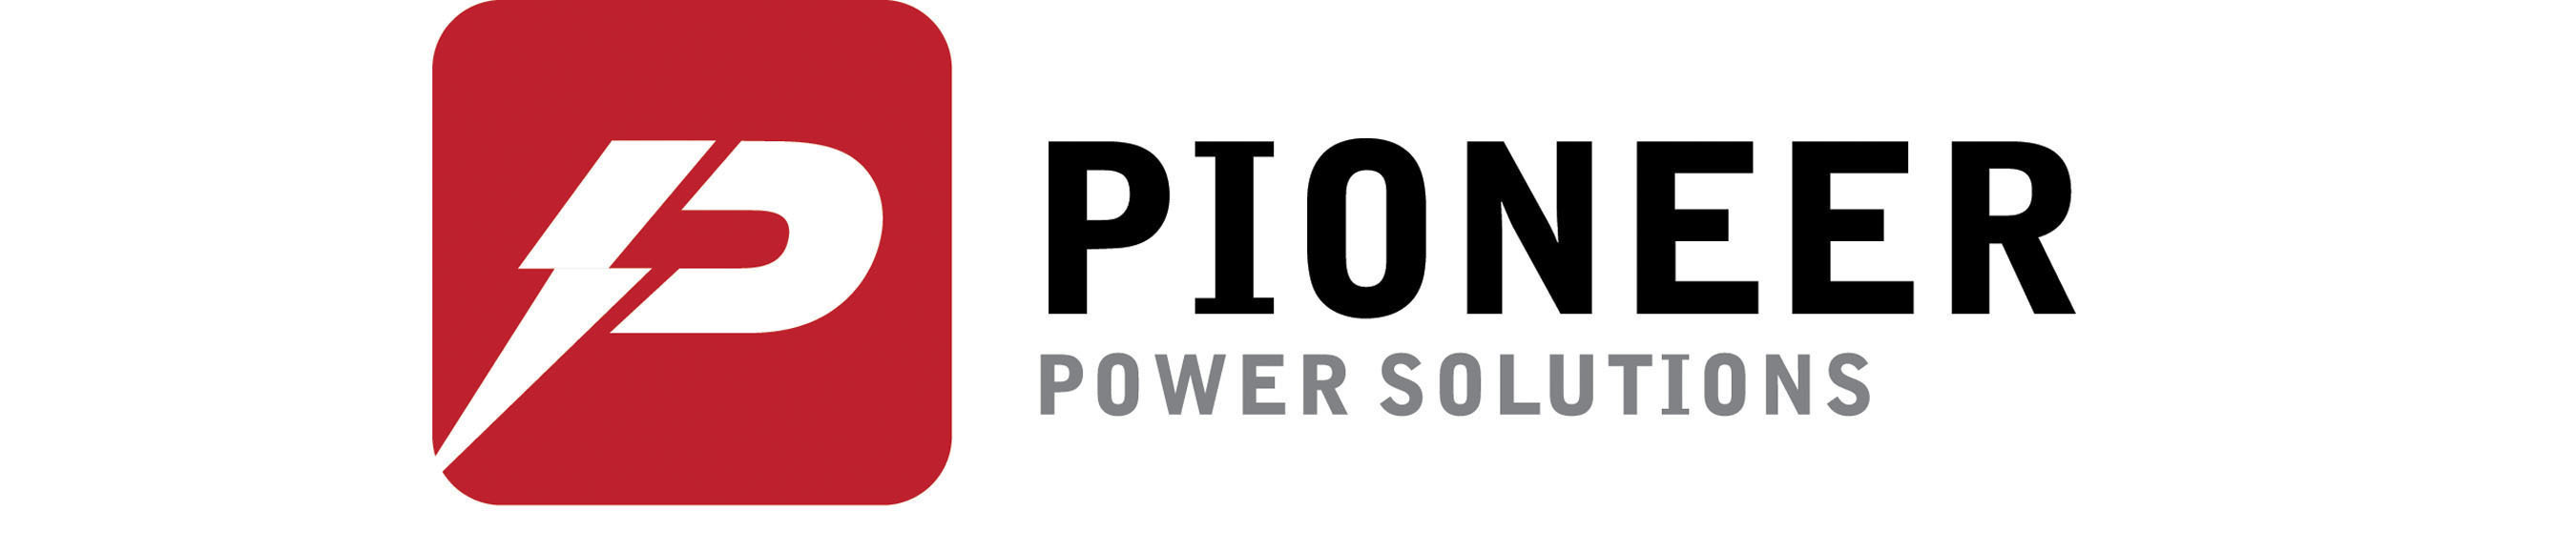 Pioneer Power Solutions, Inc.